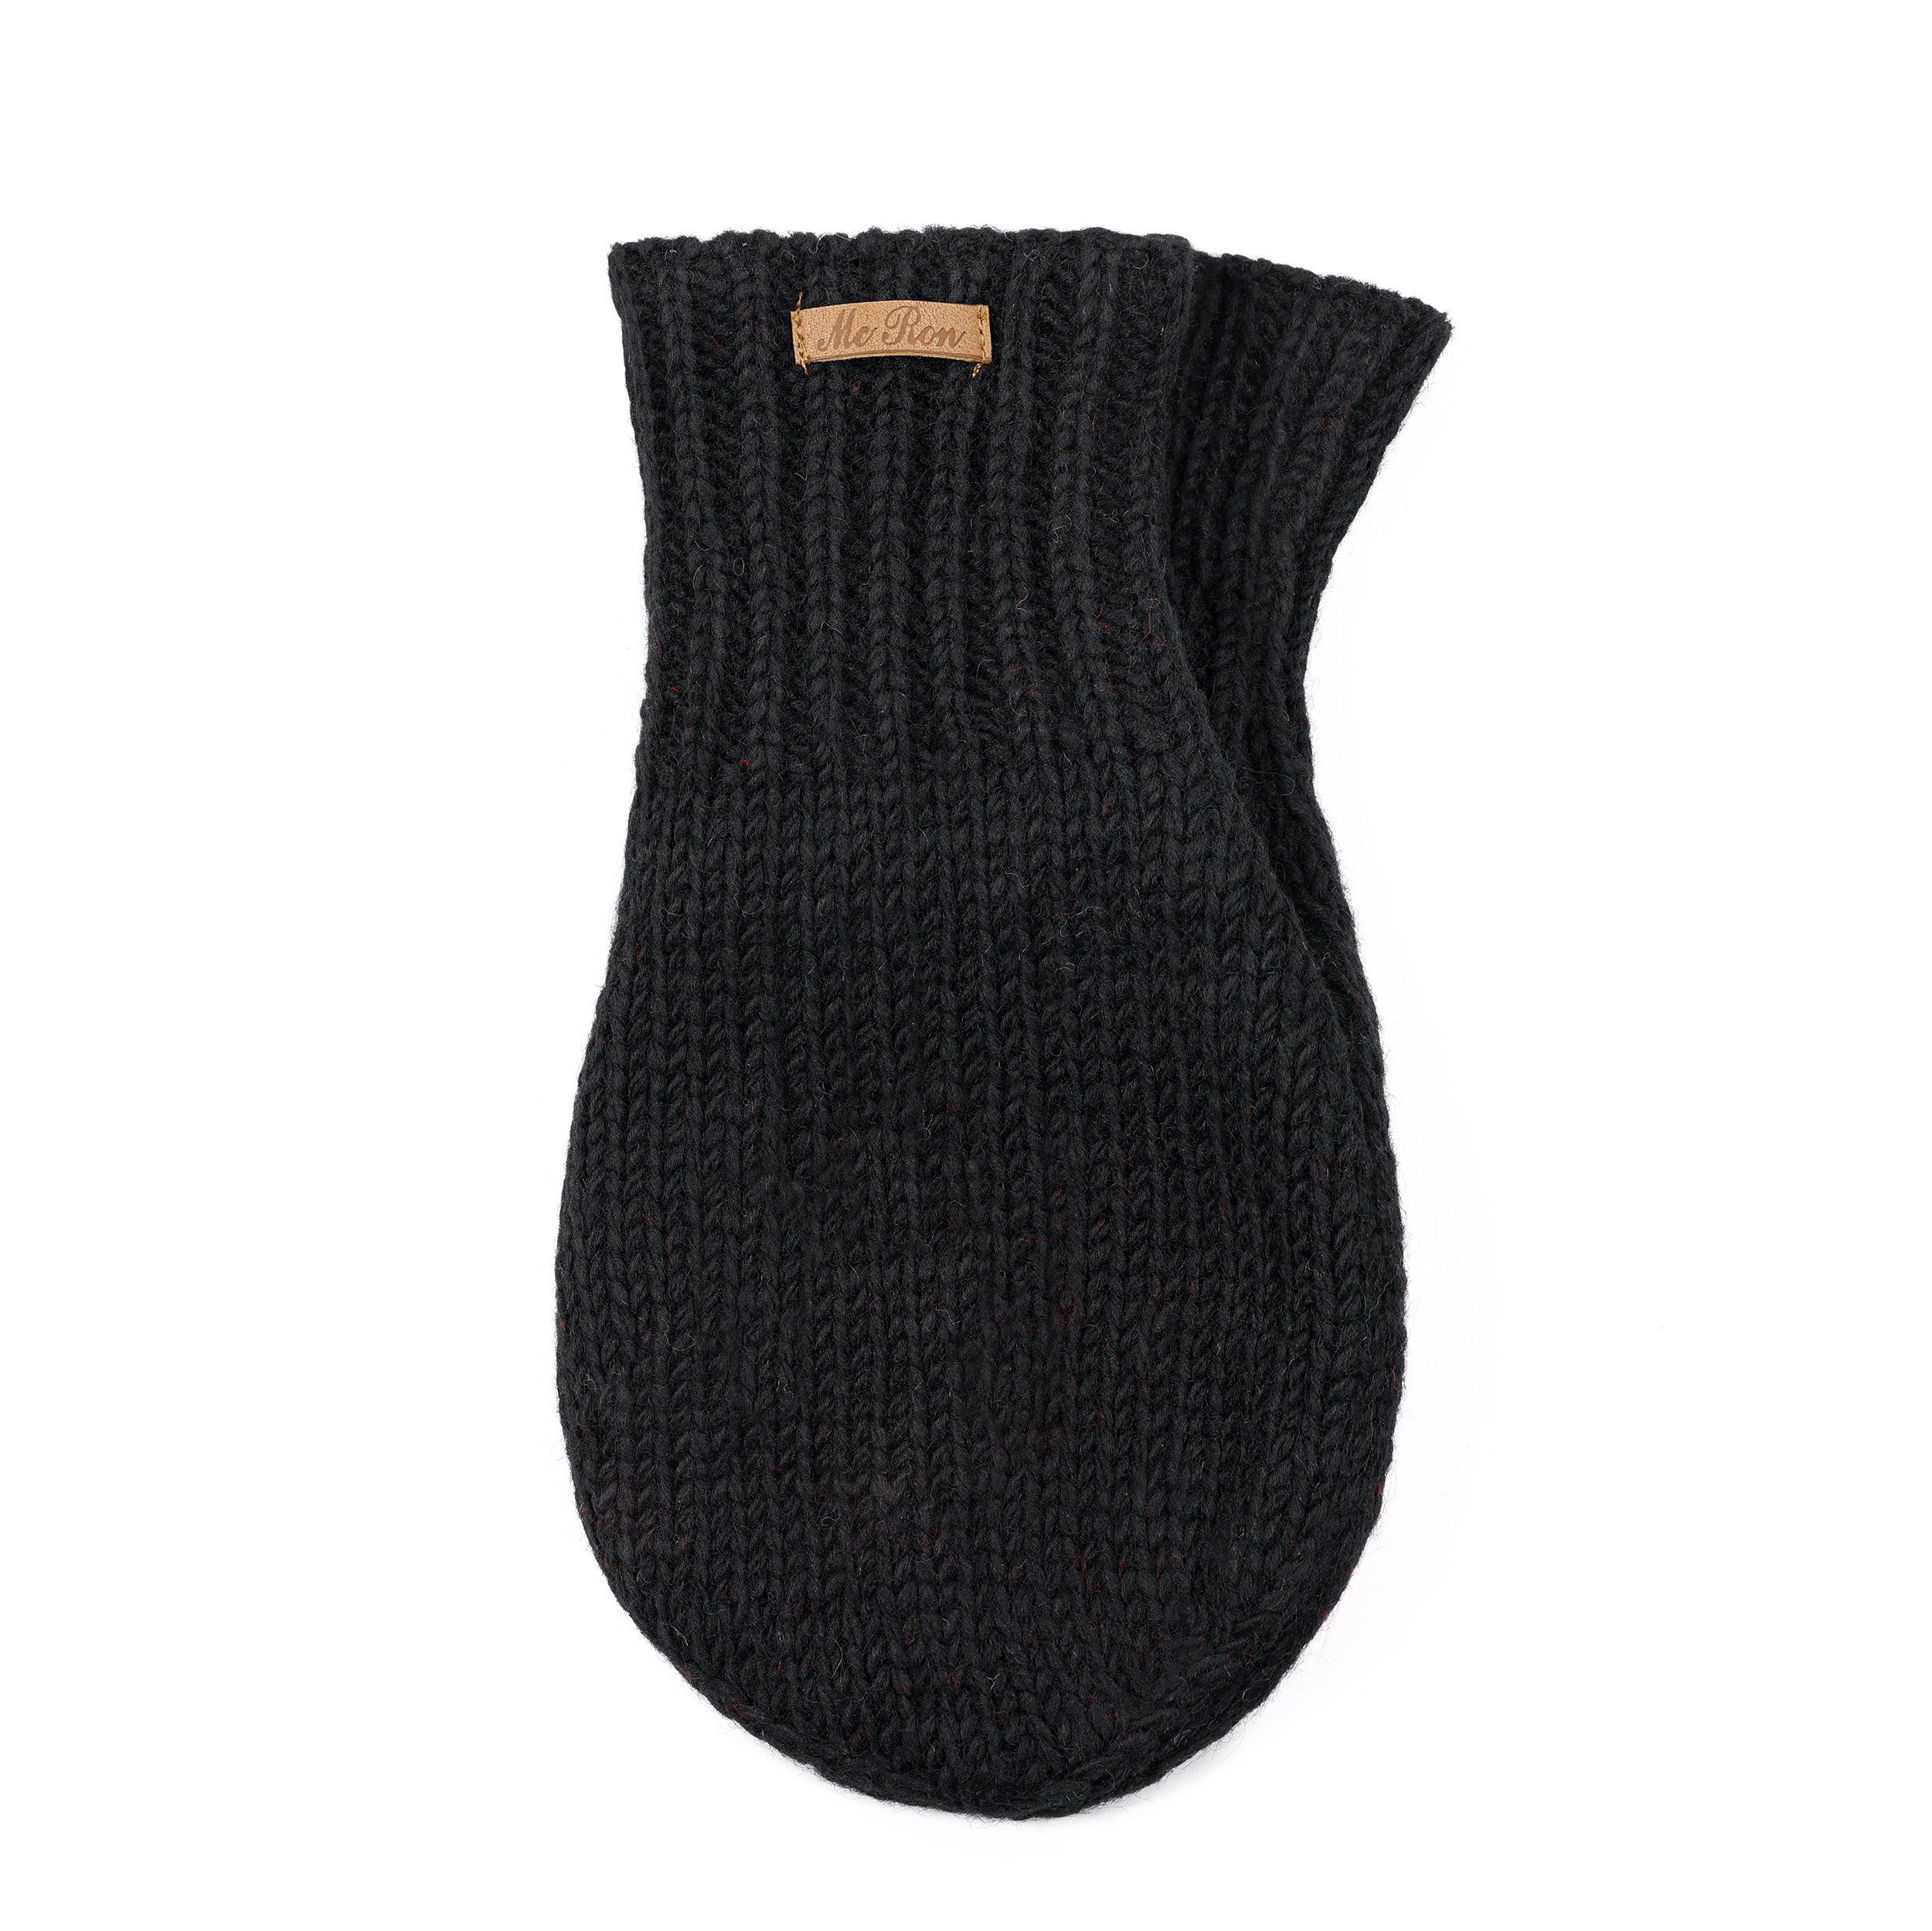 McRon Strickhandschuhe Pärchenhandschuh Modell Valentin Ein Handschuh zum Händchenhalten, komplett mit Fleece gefüttert Schwarz | Strickhandschuhe